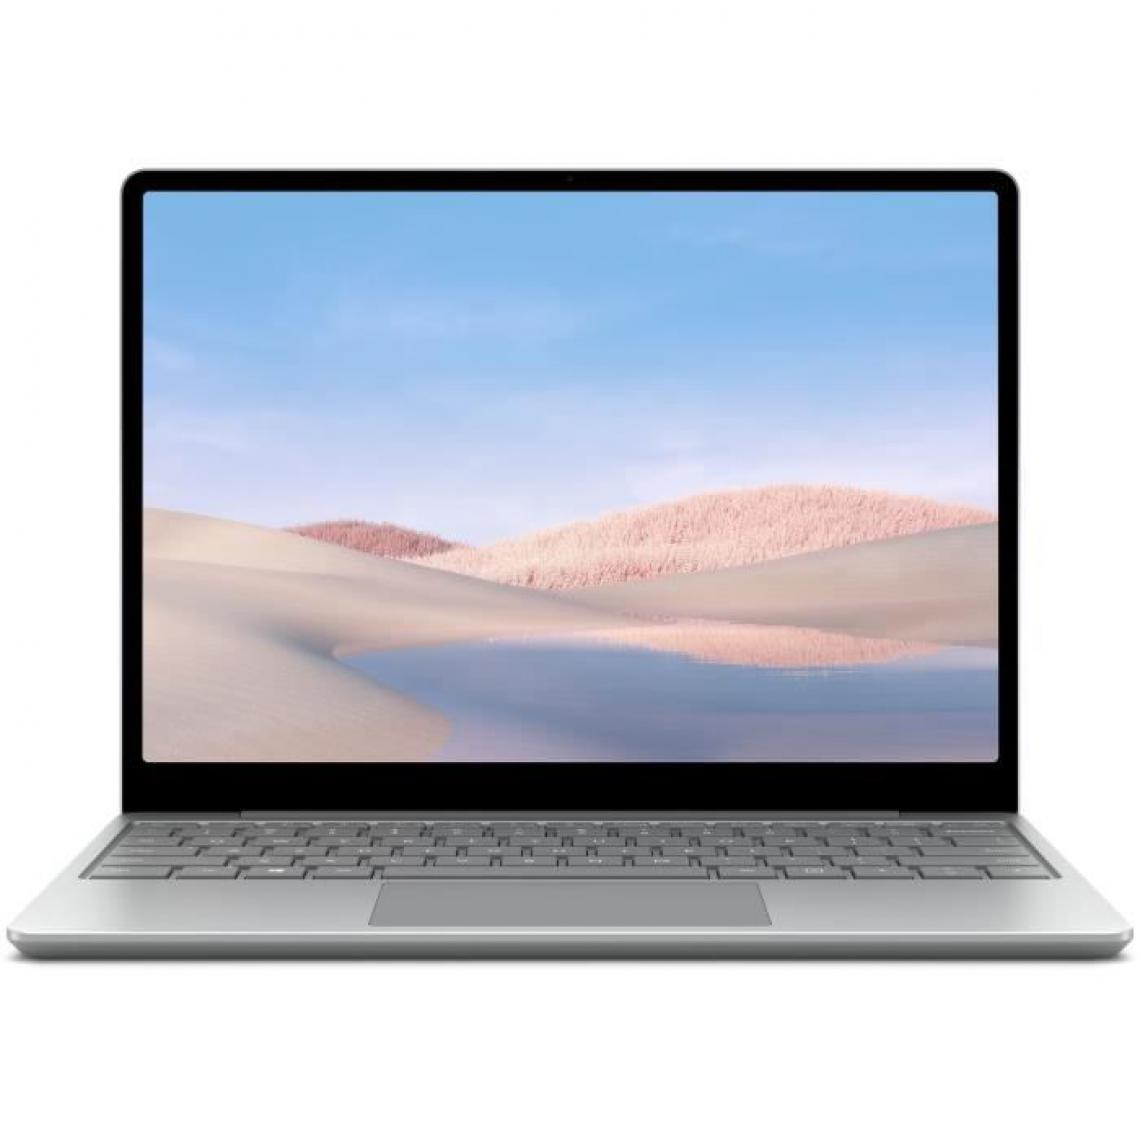 Microsoft - MICROSOFT Surface Laptop Go - 12,45 - Intel Core i5 1035G1 - RAM 8Go - Stockage 64Go eMMC - Platine - Windows 10 - PC Portable